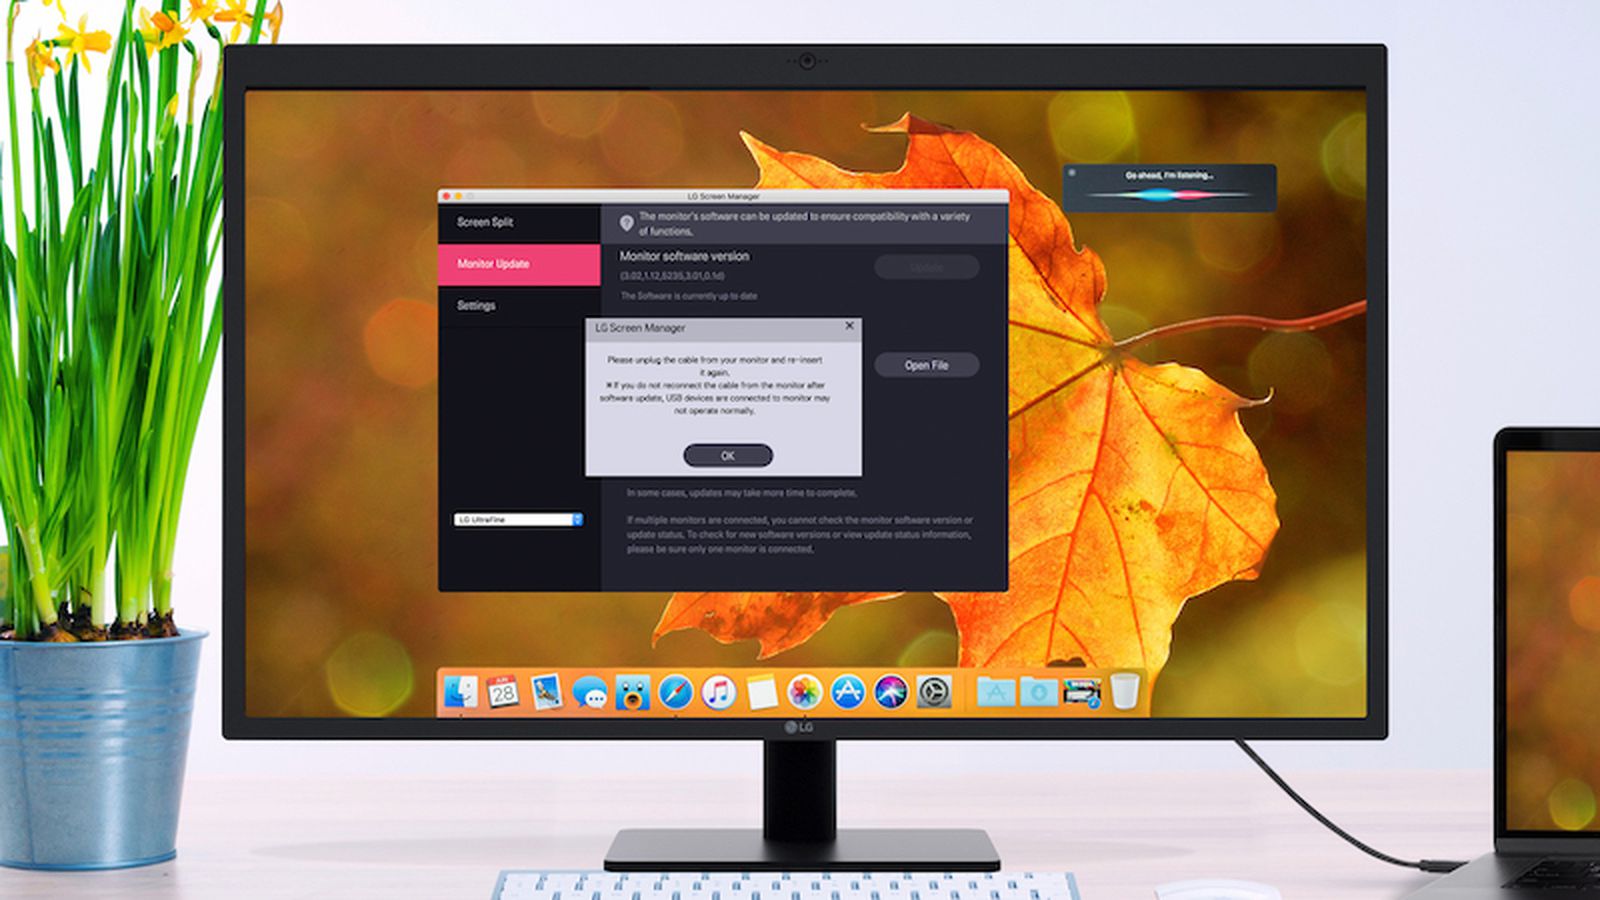 Lg split screen software download mac download windows chrome installer